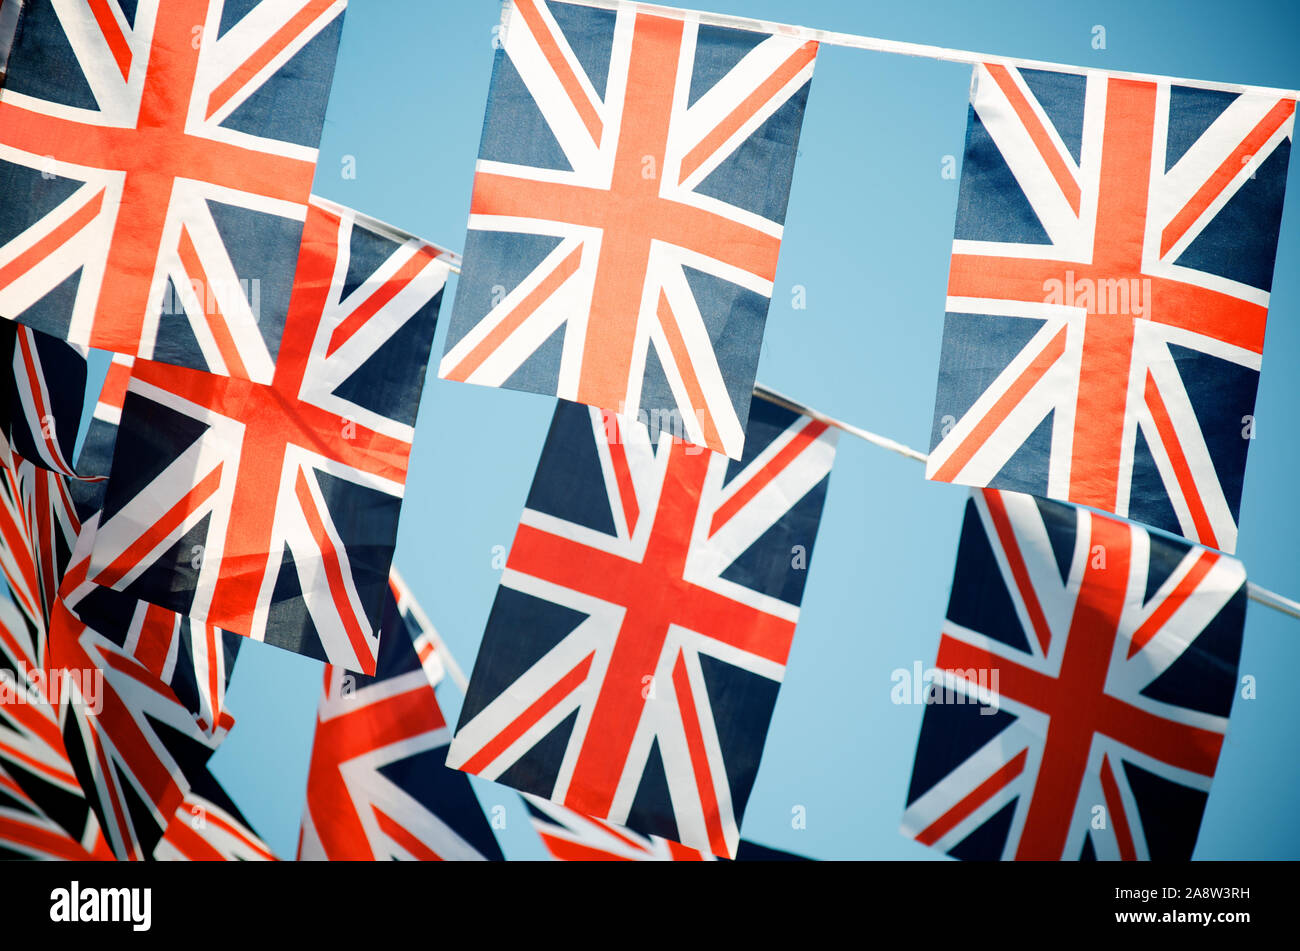 Celebratory British Union Jack flag bunting strung in rows across blue sky Stock Photo